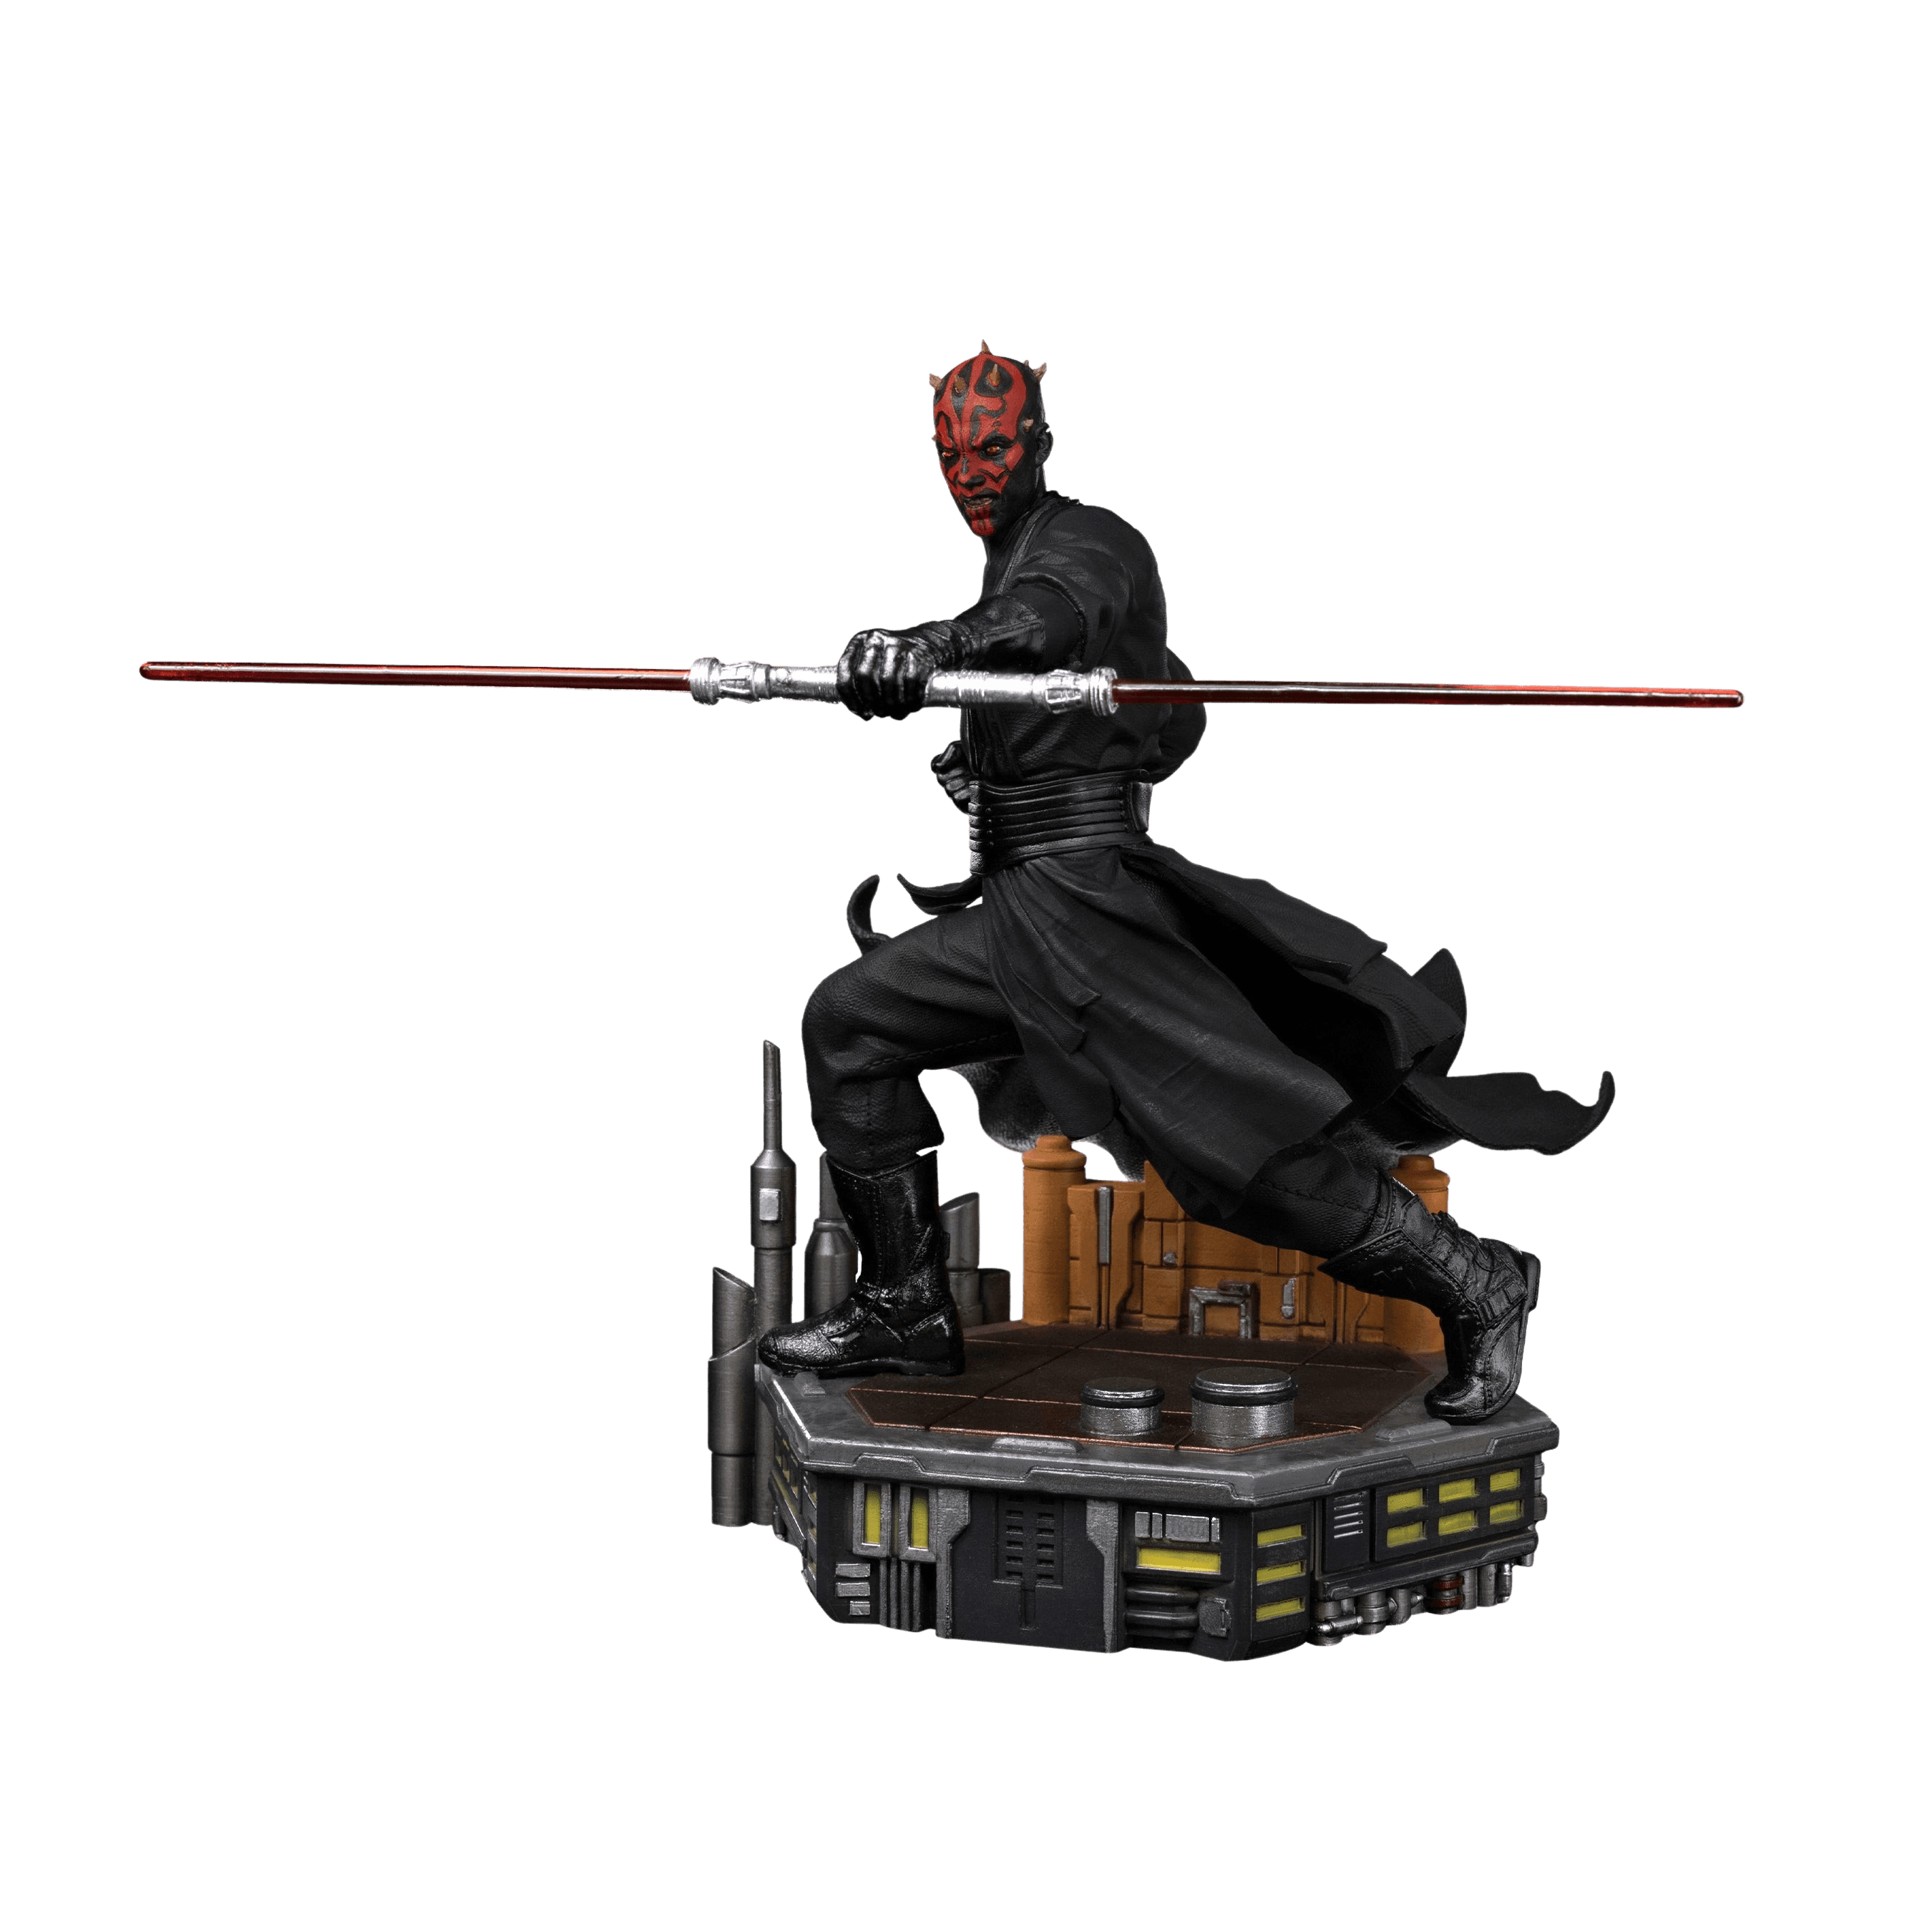 Iron Studios - Star Wars - Darth Maul BDS Art Scale Statue 1/10 - The Card Vault